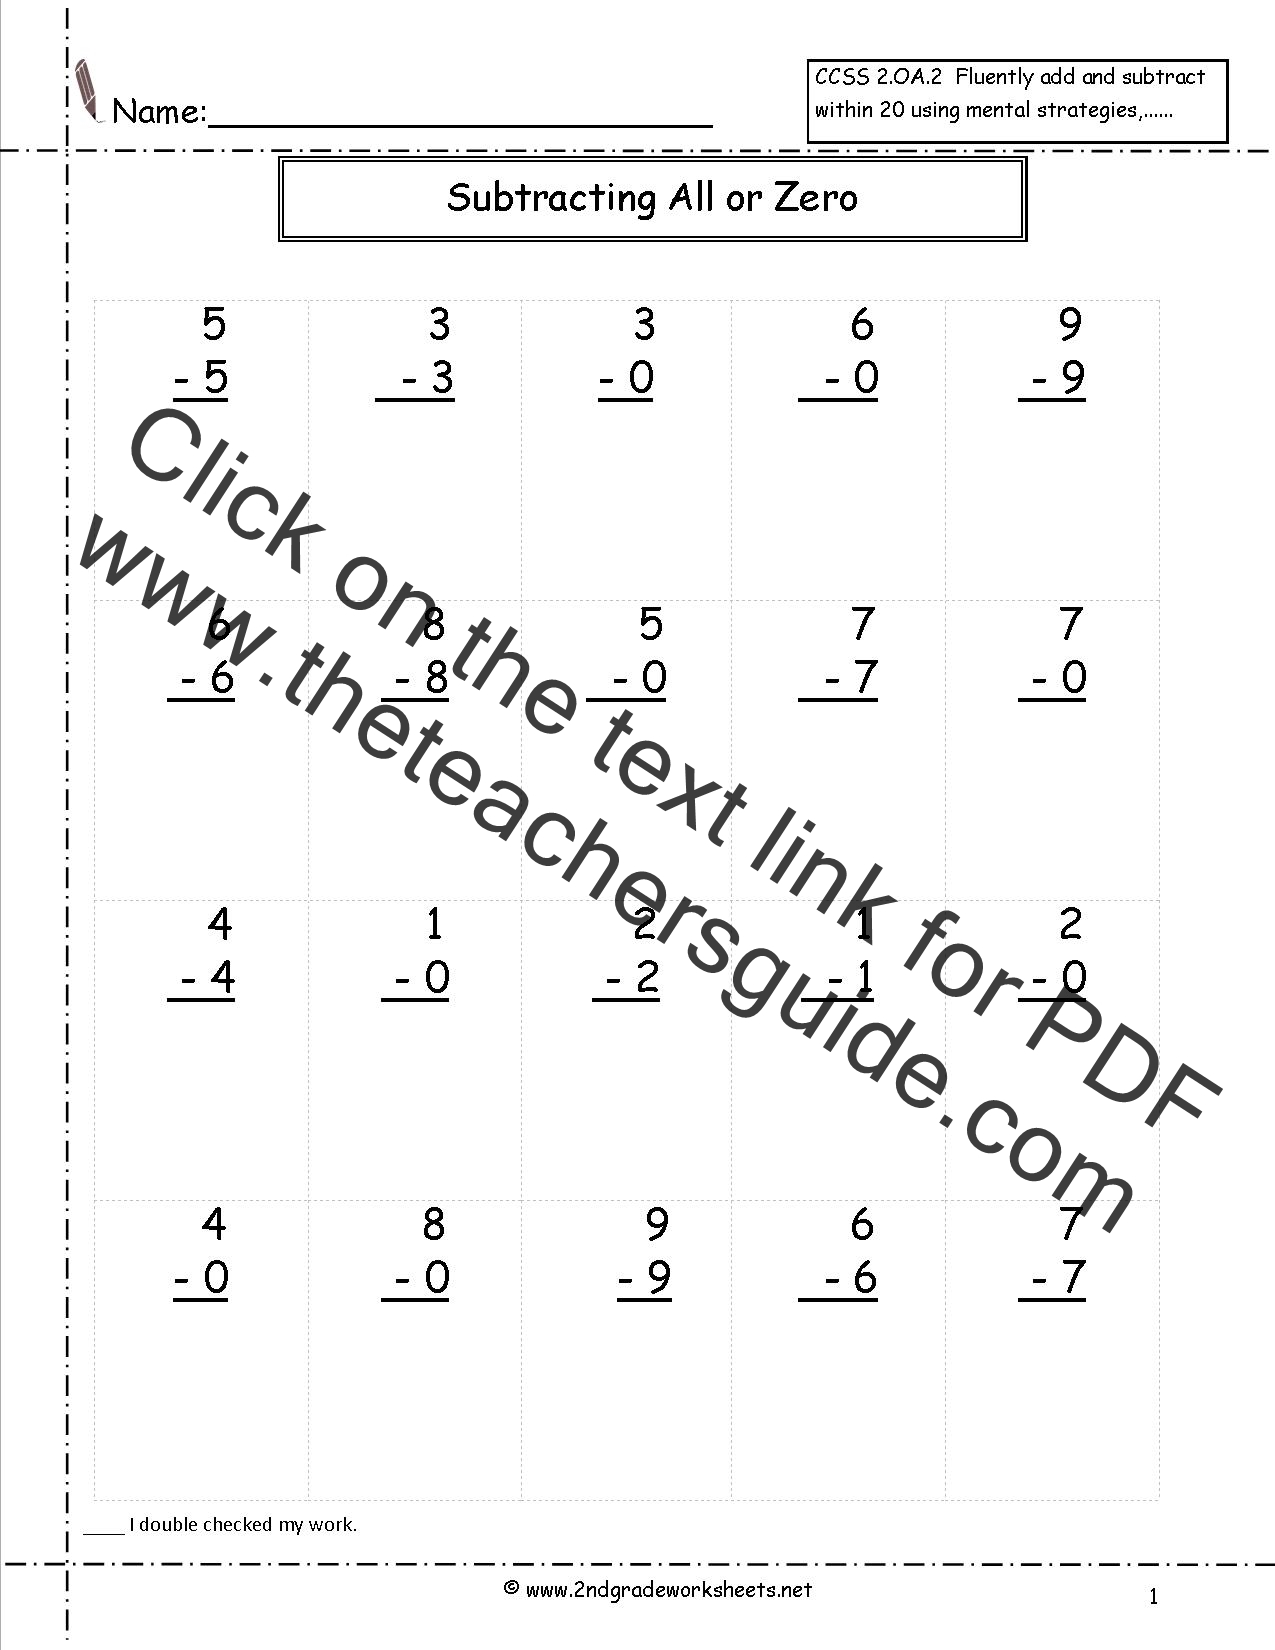 single-digit-subtraction-worksheet-casademateo